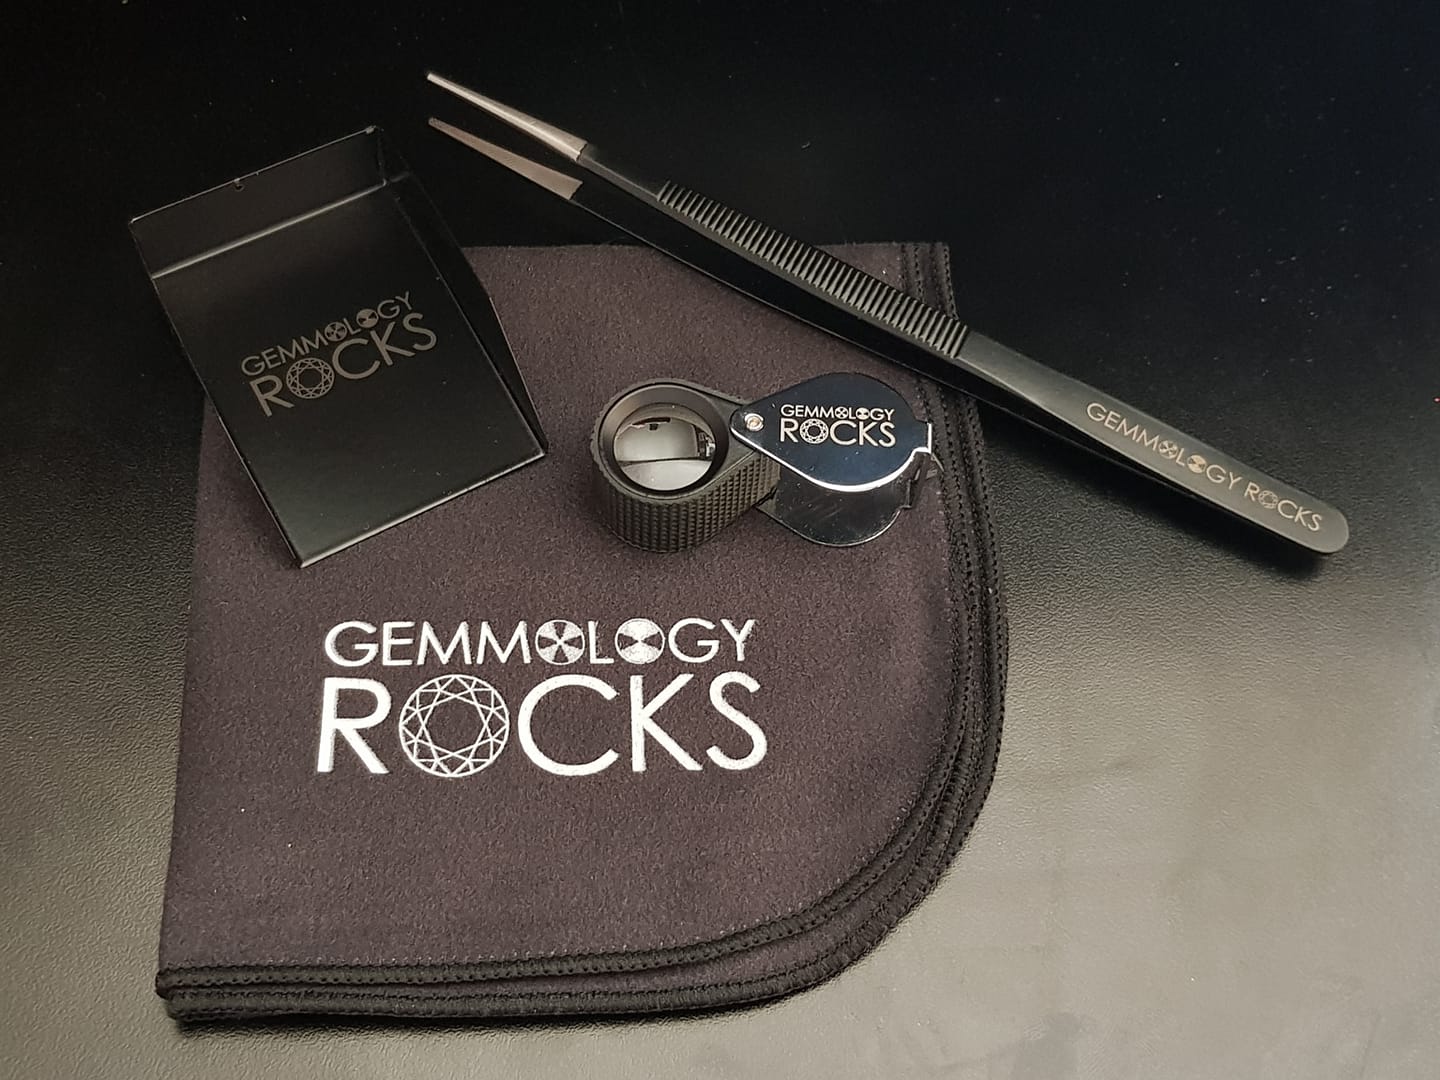 Gemmology Rocks - Basic gem tools